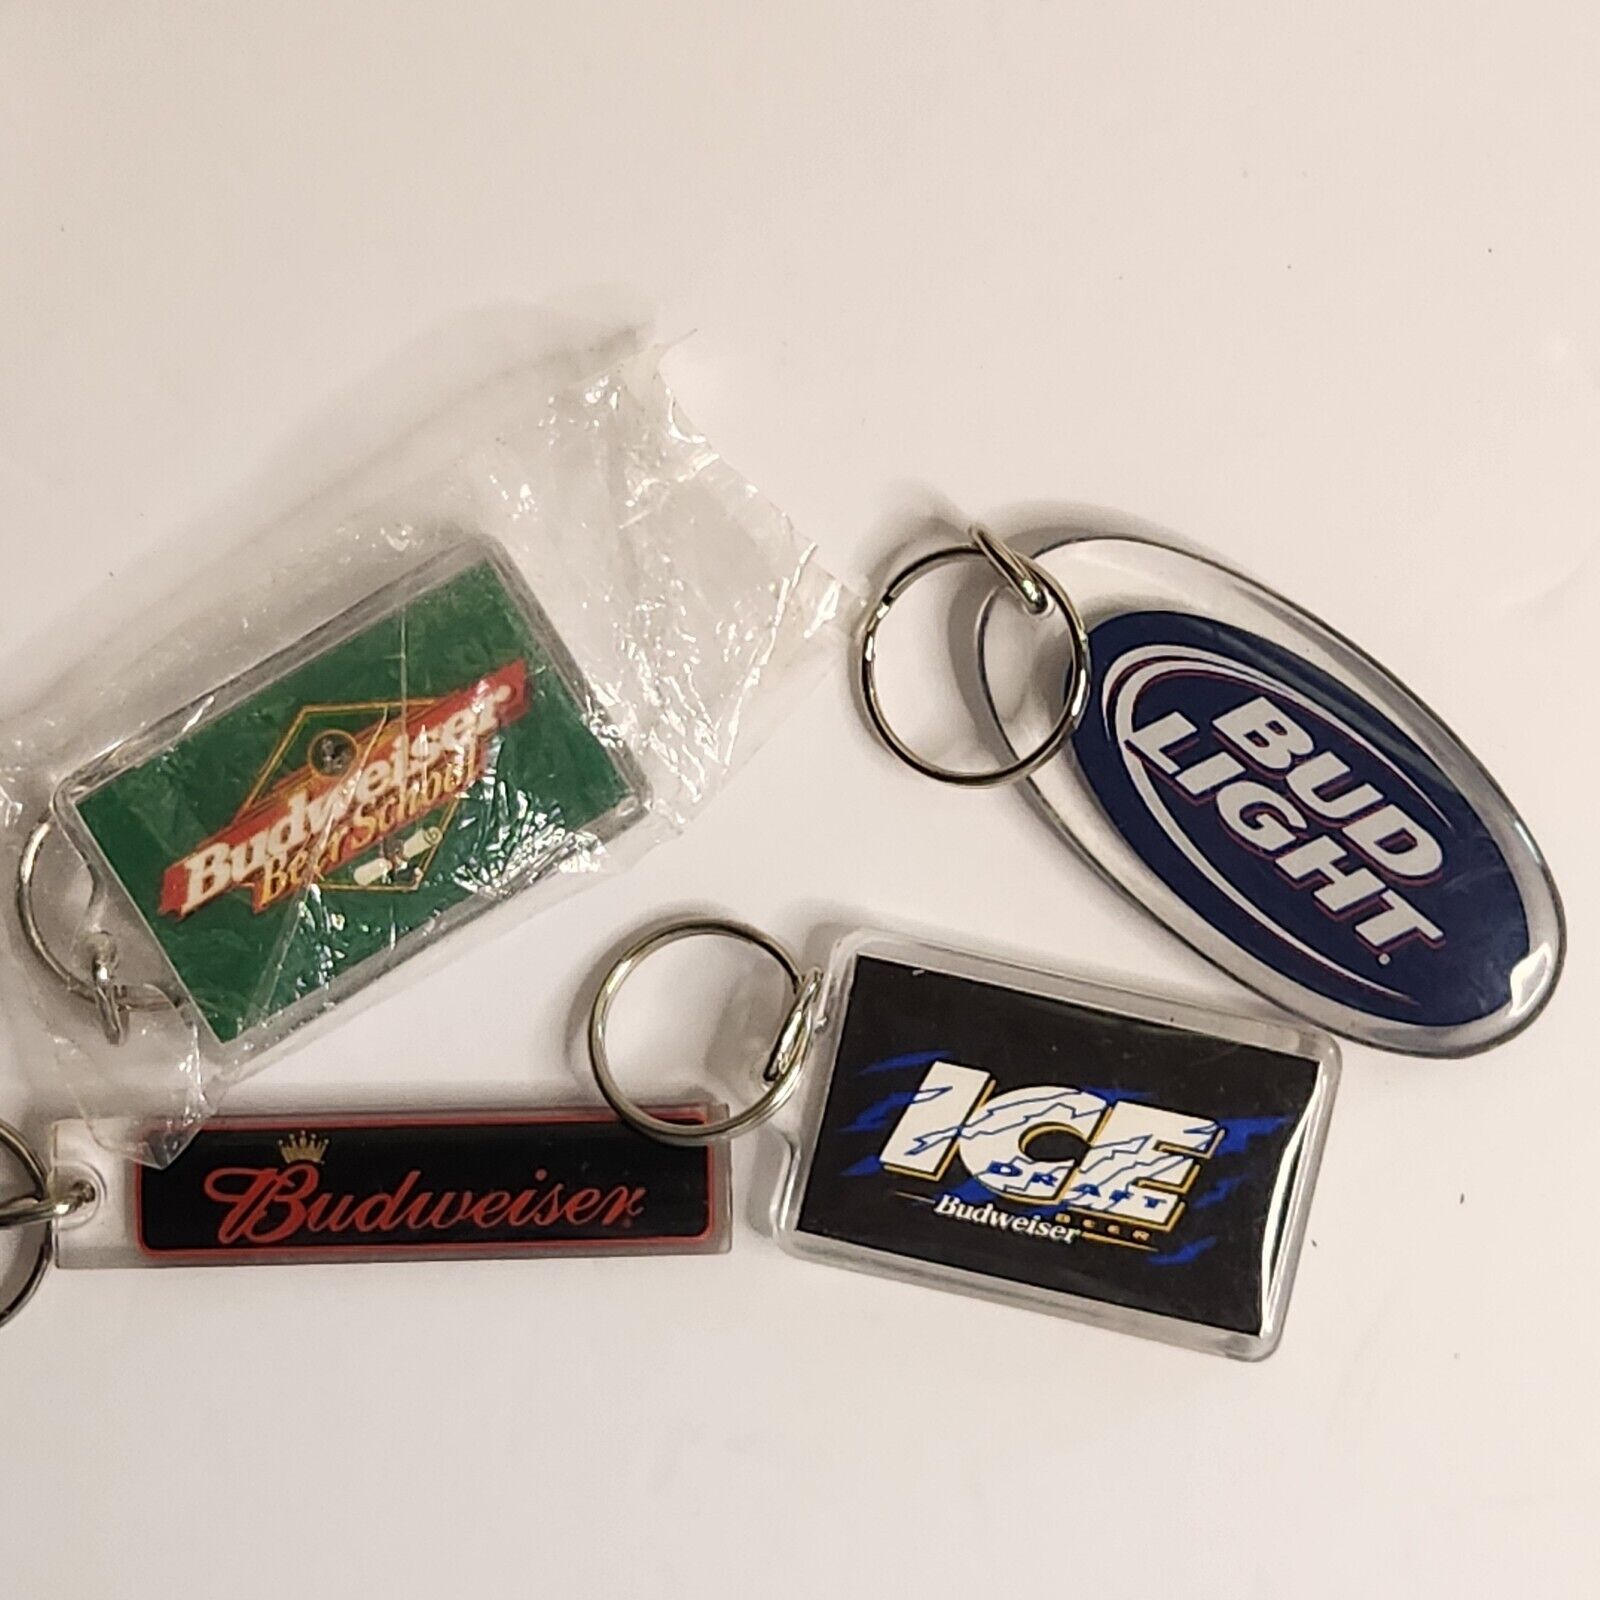 Vintage Lot of Budweiser Bud Bud Light Ice Draft Beer Key Chains Keychains 